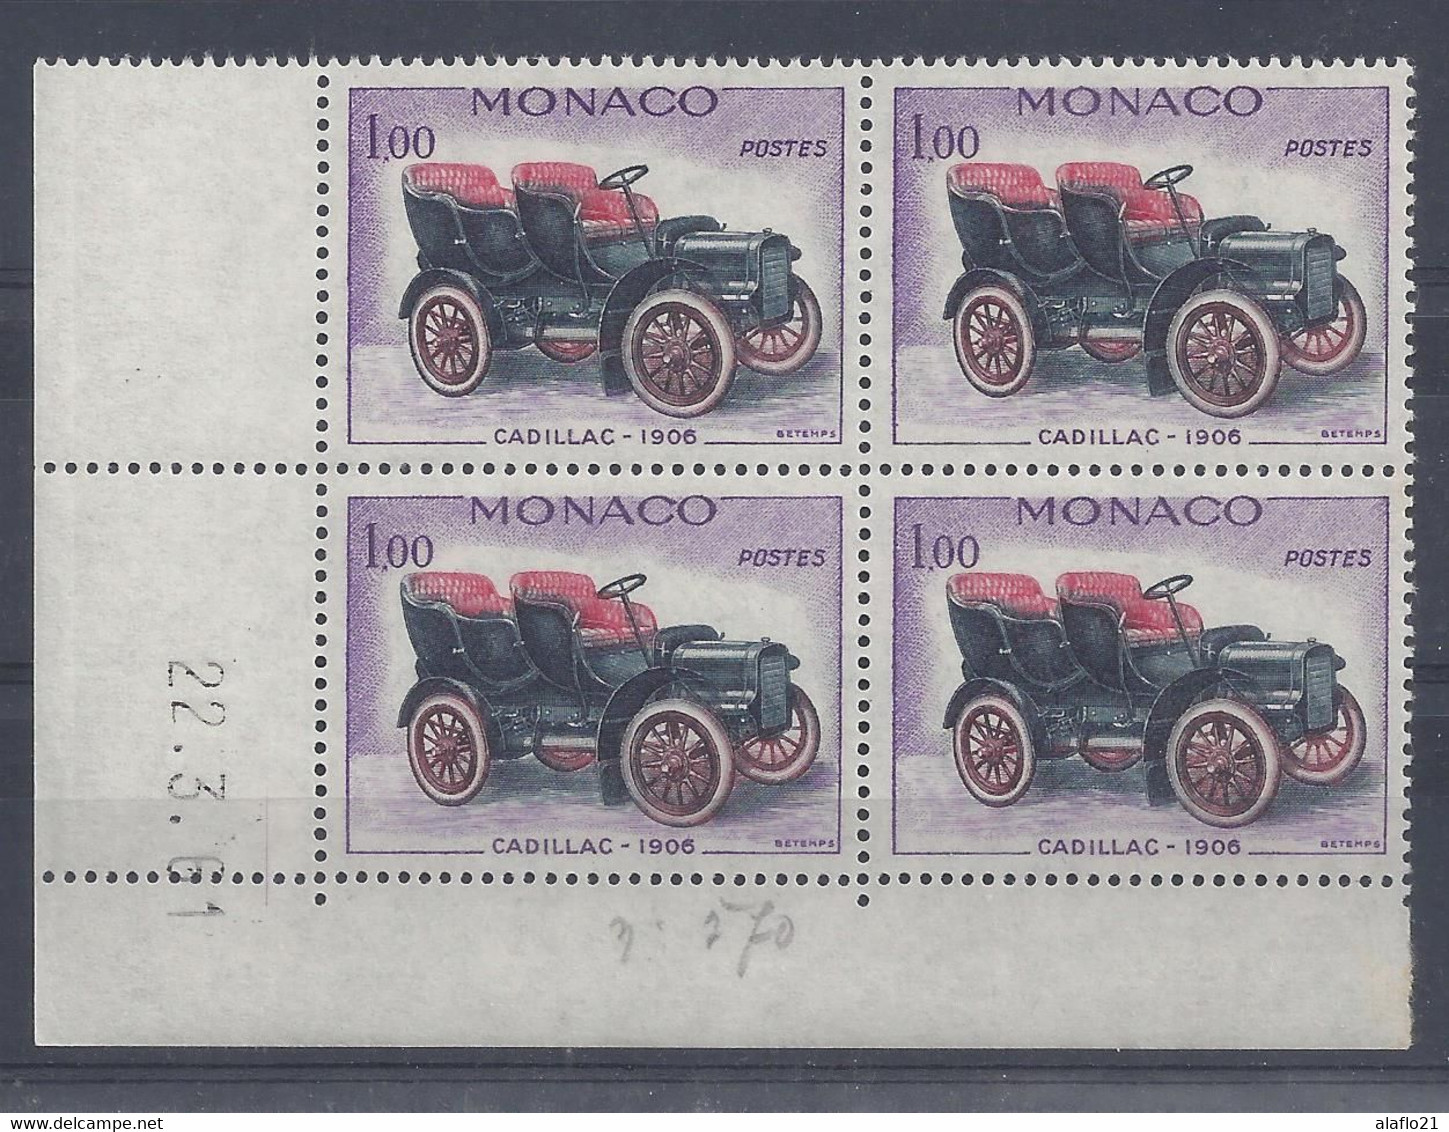 MONACO - N° 570 - CADILLAC 1906 - Bloc De 4 COIN DATE - NEUF SANS CHARNIERE - 22/3/61 - Unused Stamps